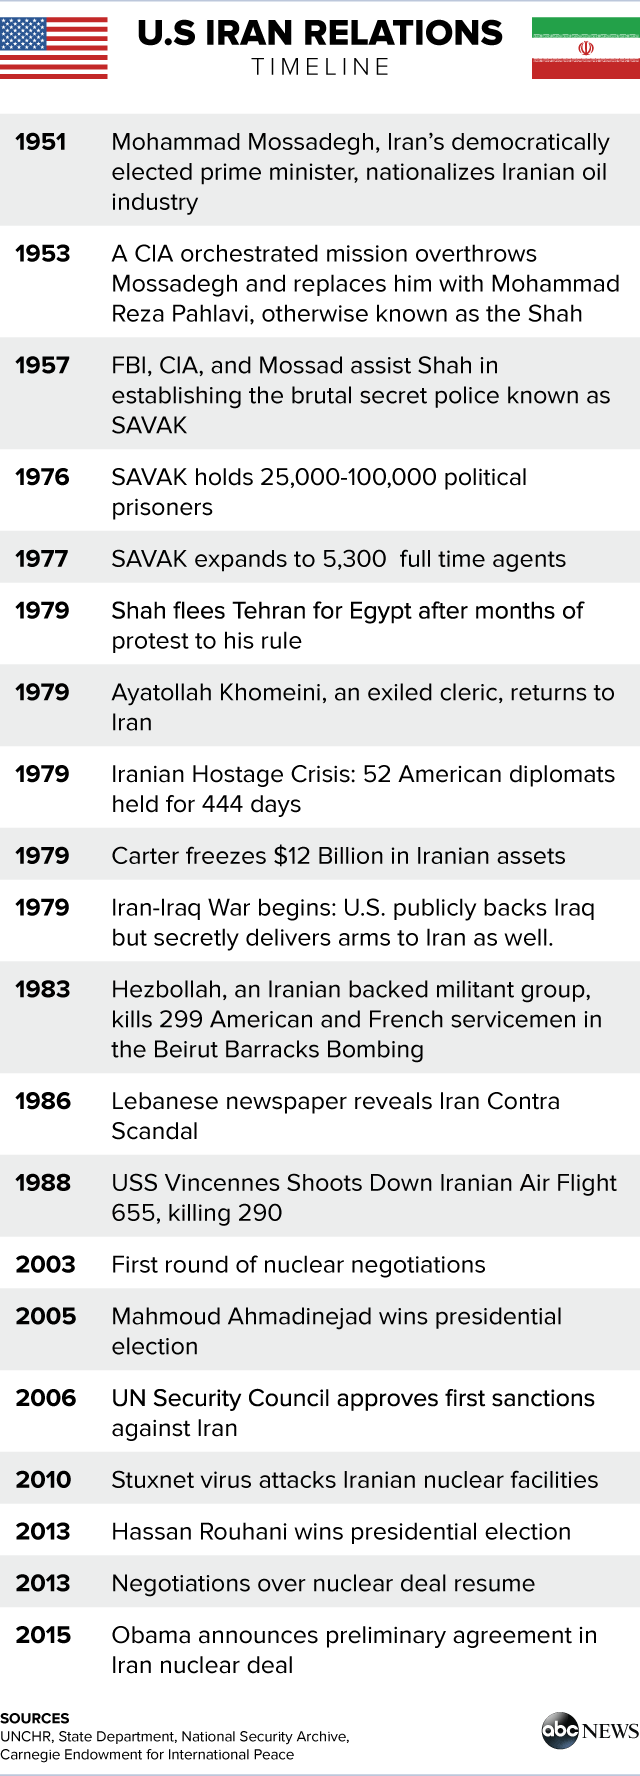 Iran profile - timeline